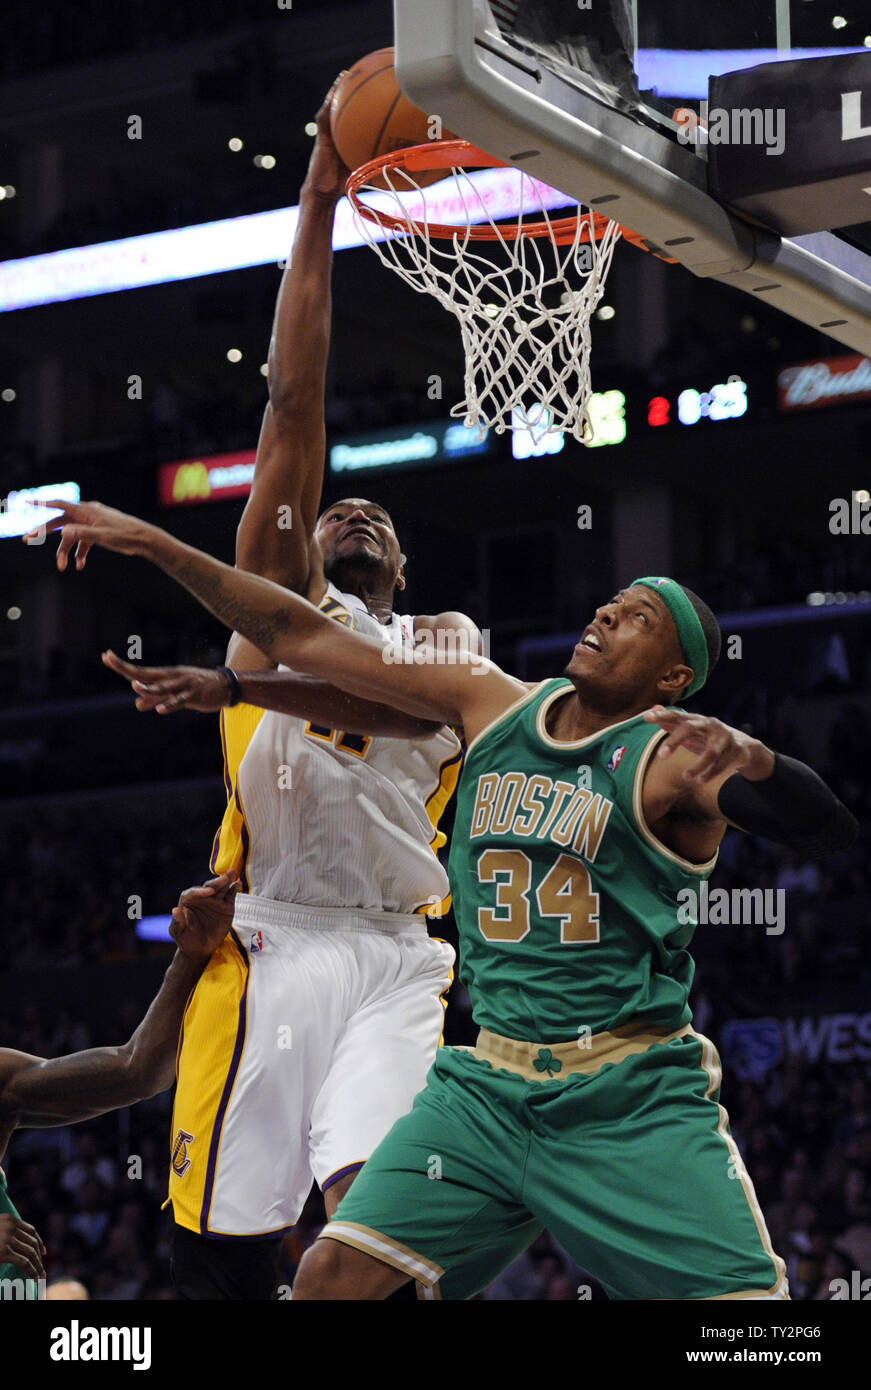 Los Angeles Lakers center Andrew Bynum (17) dunks über Boston Celtics Small Forward Paul Pierce (34) in der ersten Hälfte des NBA Basketball Spiel in Los Angeles am 11. März 2012. UPI/Lori Shepler Stockfoto